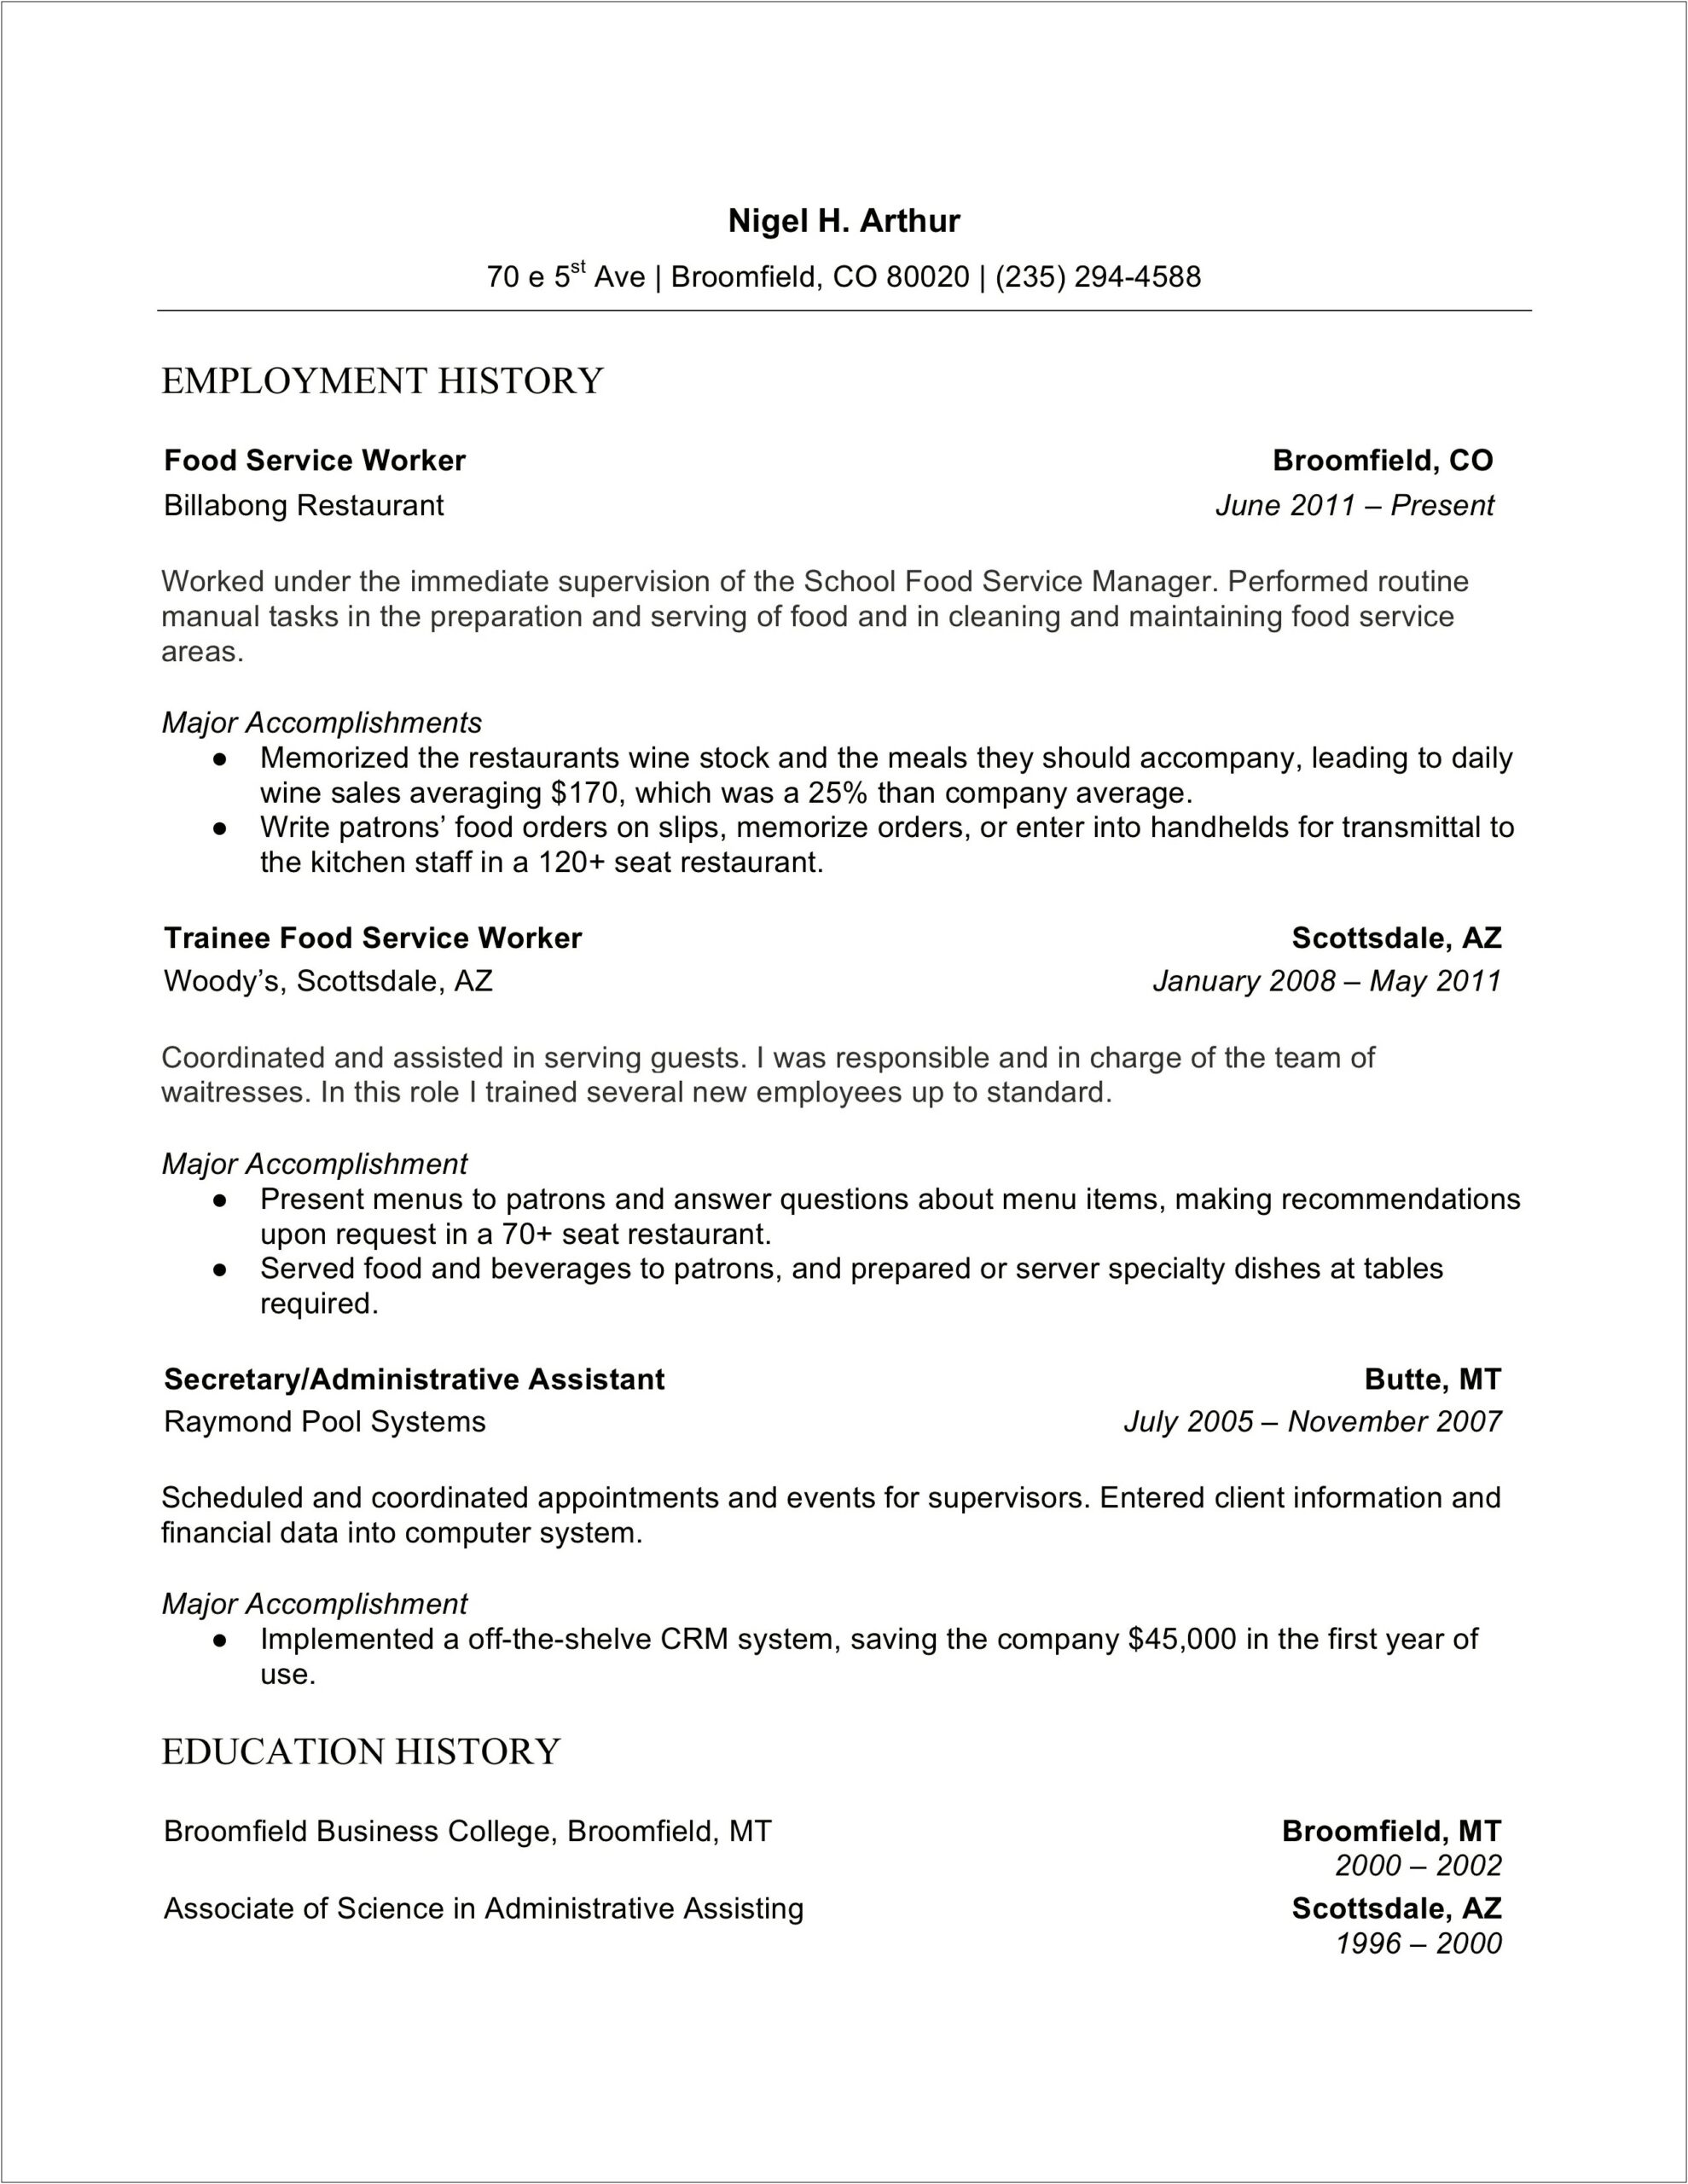 Microsoft Office 2007 Word Templates Resume